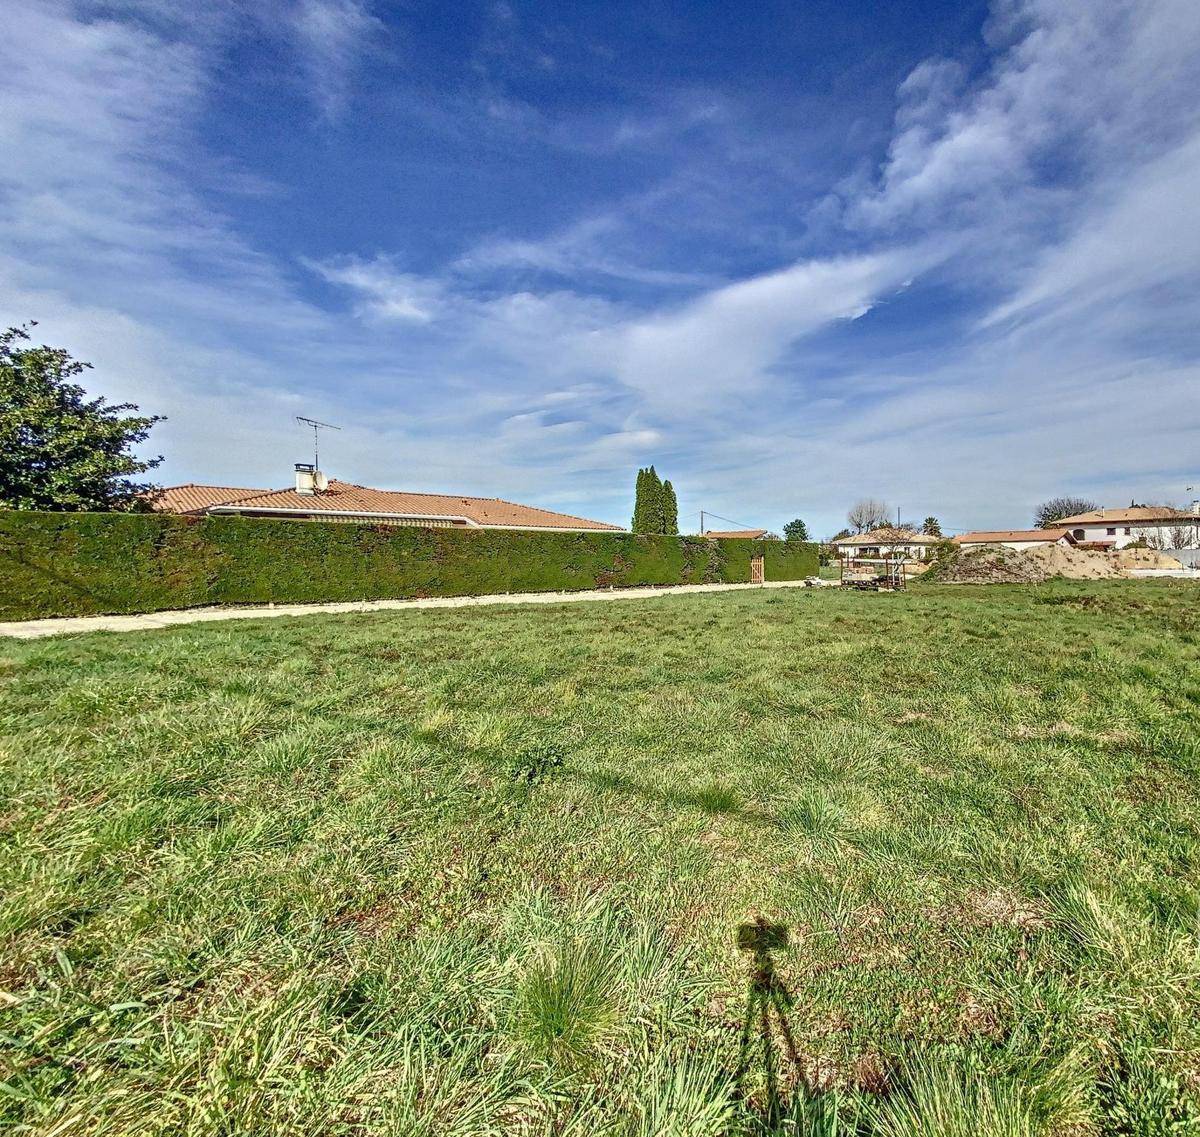 Terrain seul à Gradignan en Gironde (33) de 921 m² à vendre au prix de 265000€